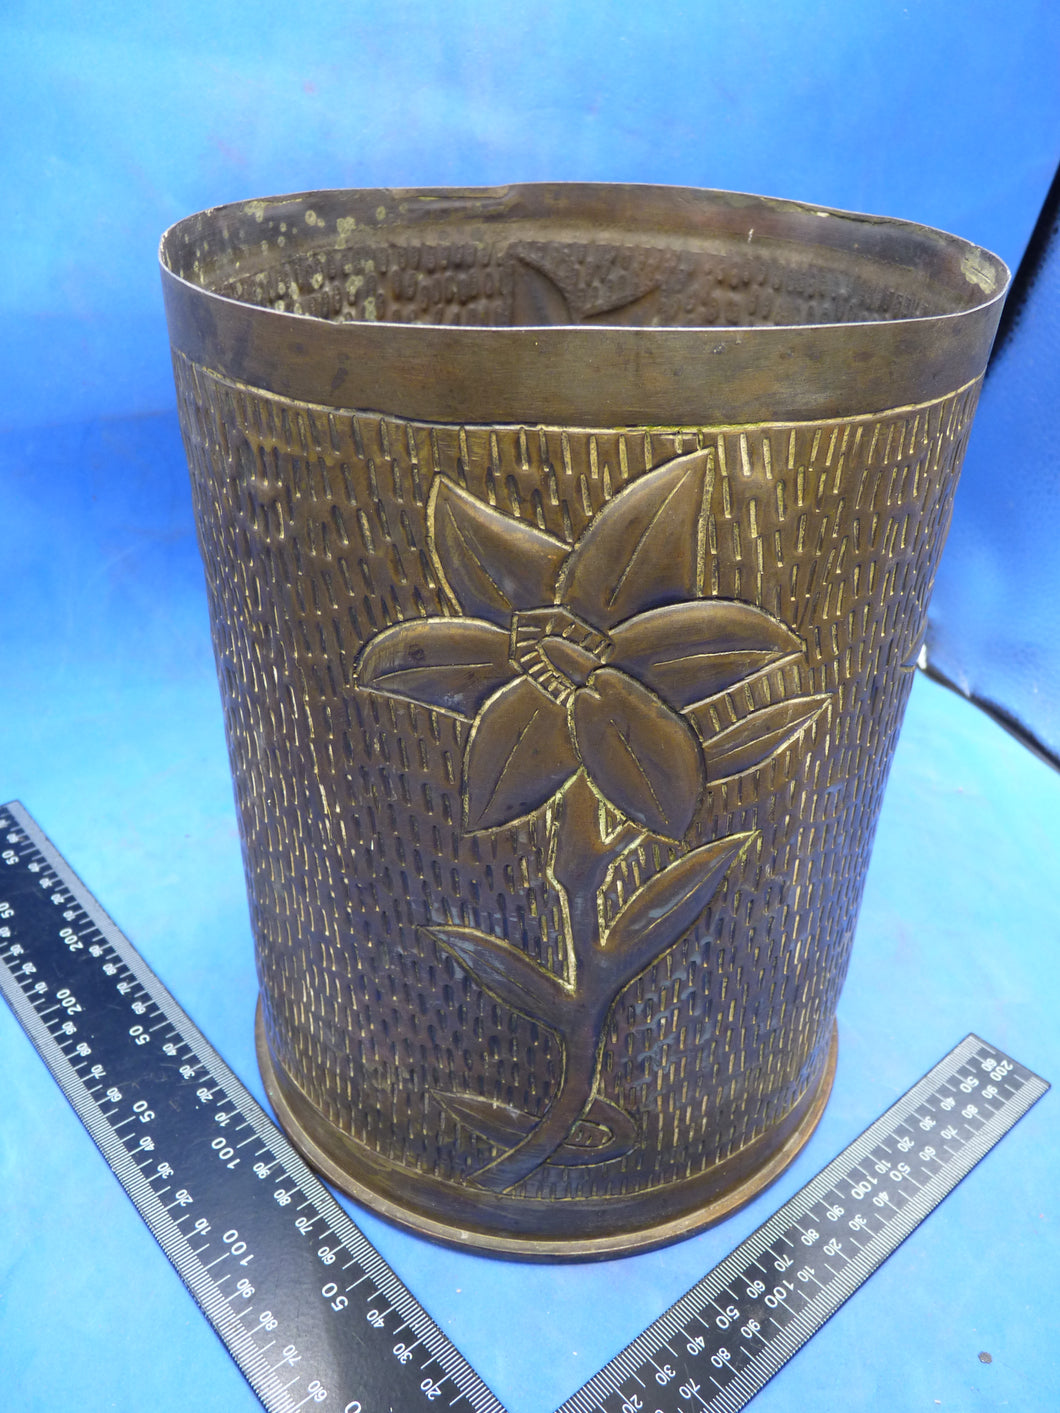 Original WW1 Trench Art Shell Case Vase - 155mm German Casing - Flowers Engraved